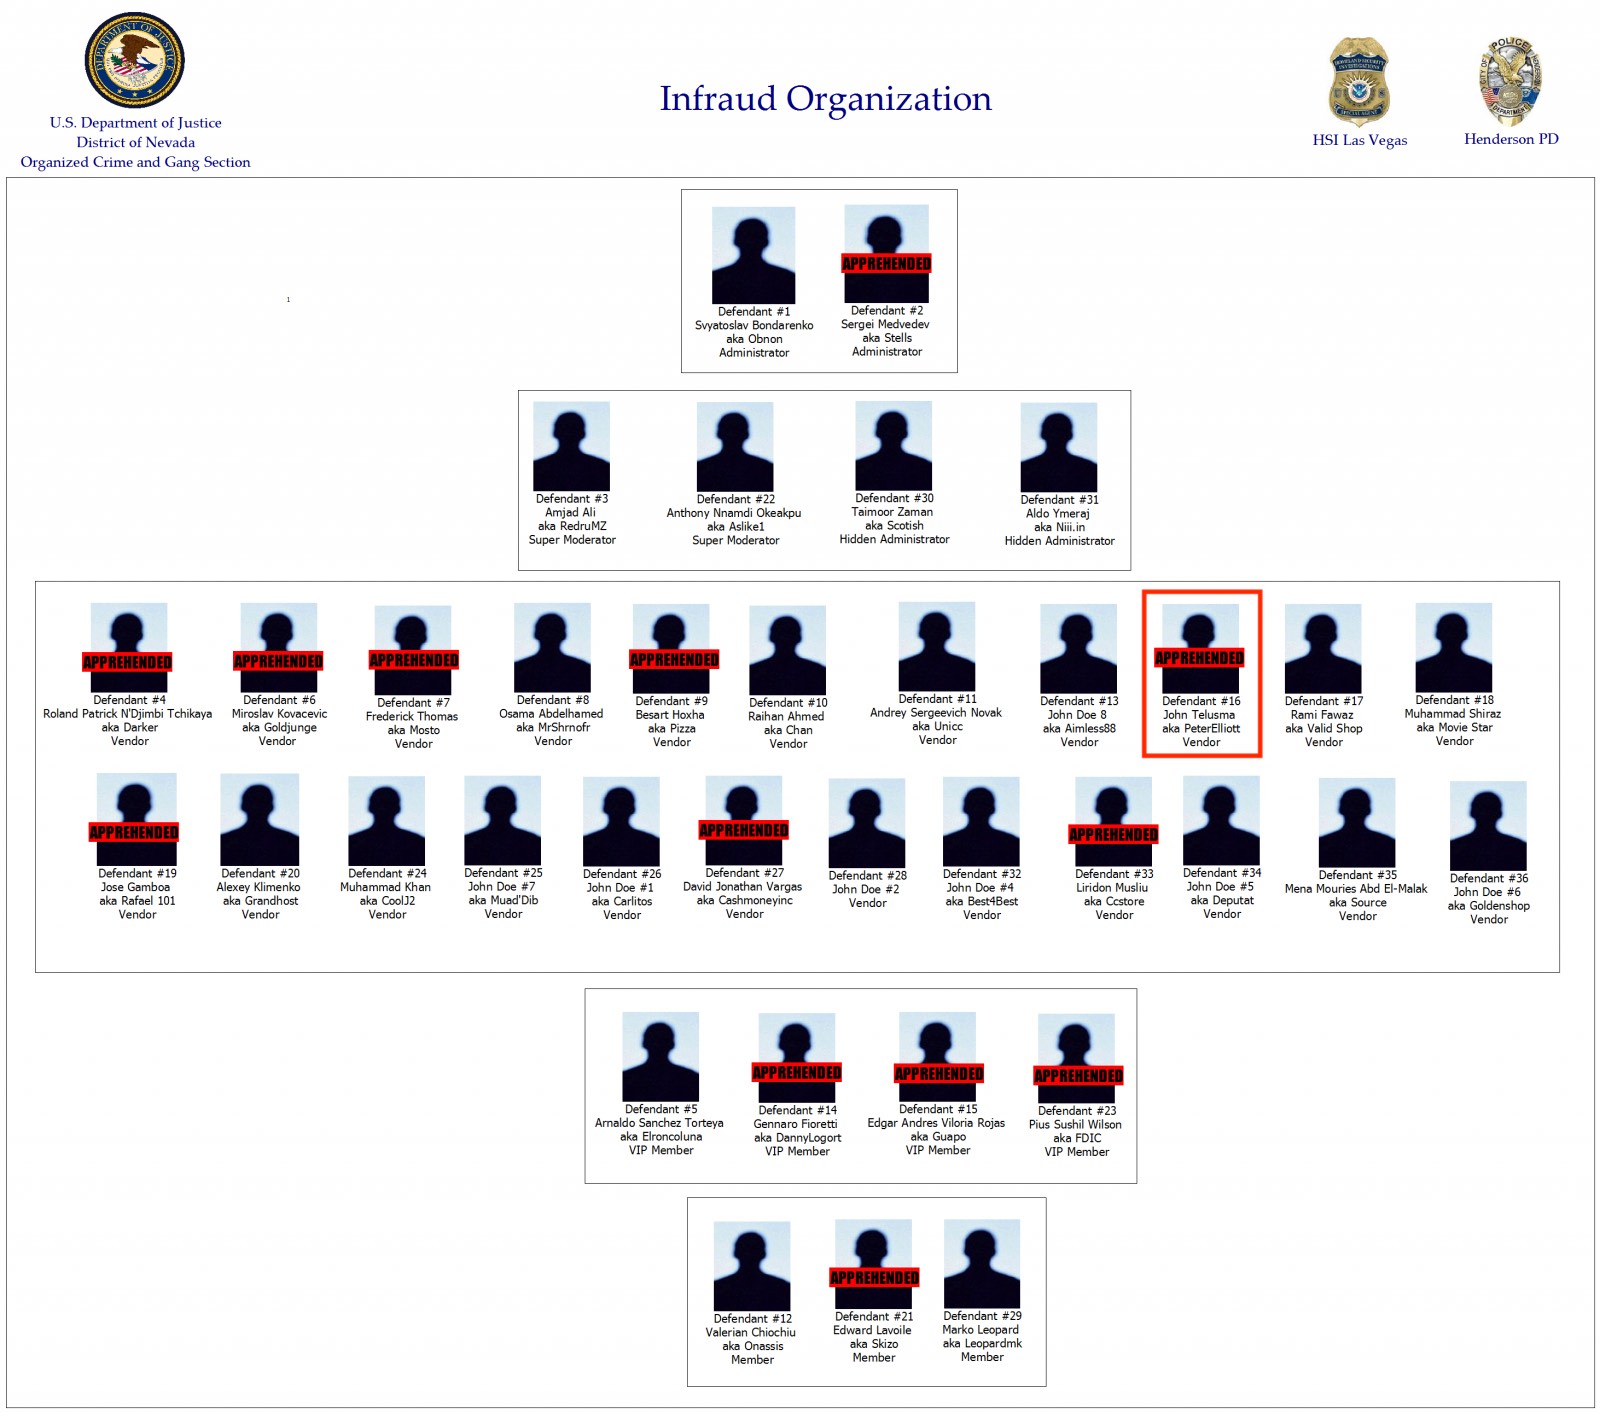 Infraud Organization hierarchy